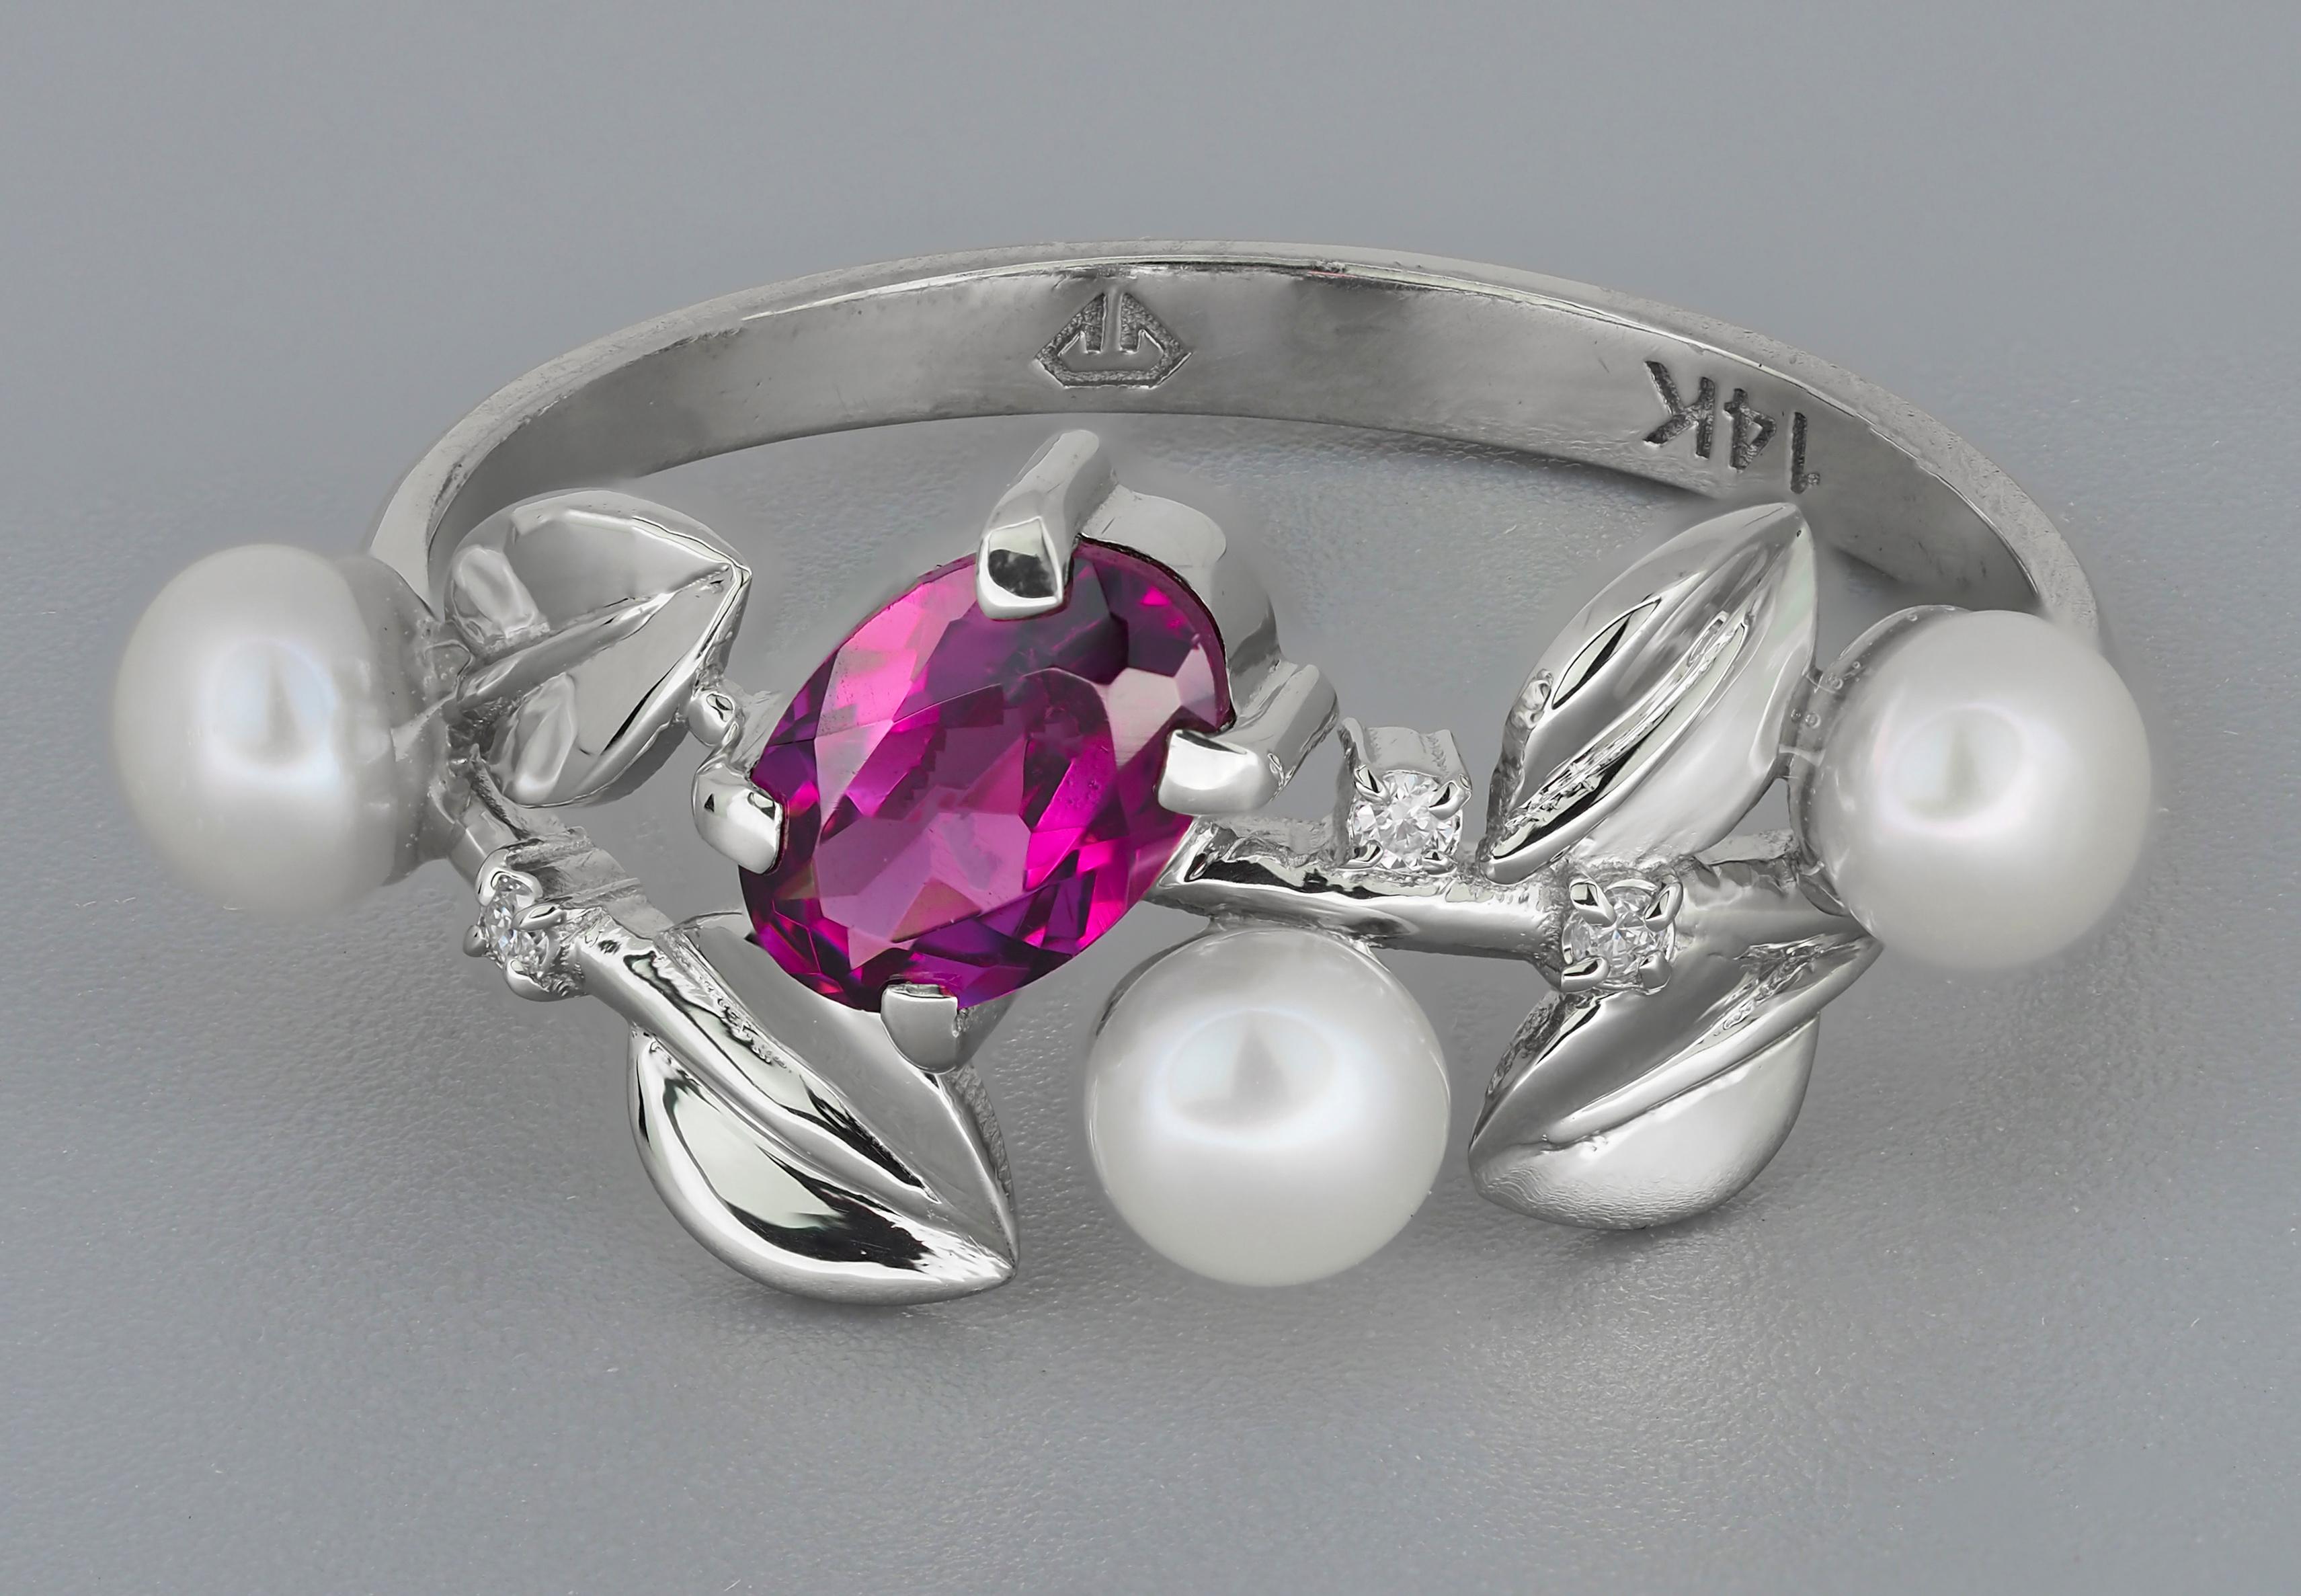 For Sale:  Garnet, pearls 14k gold ring. Gold leaves ring.  4